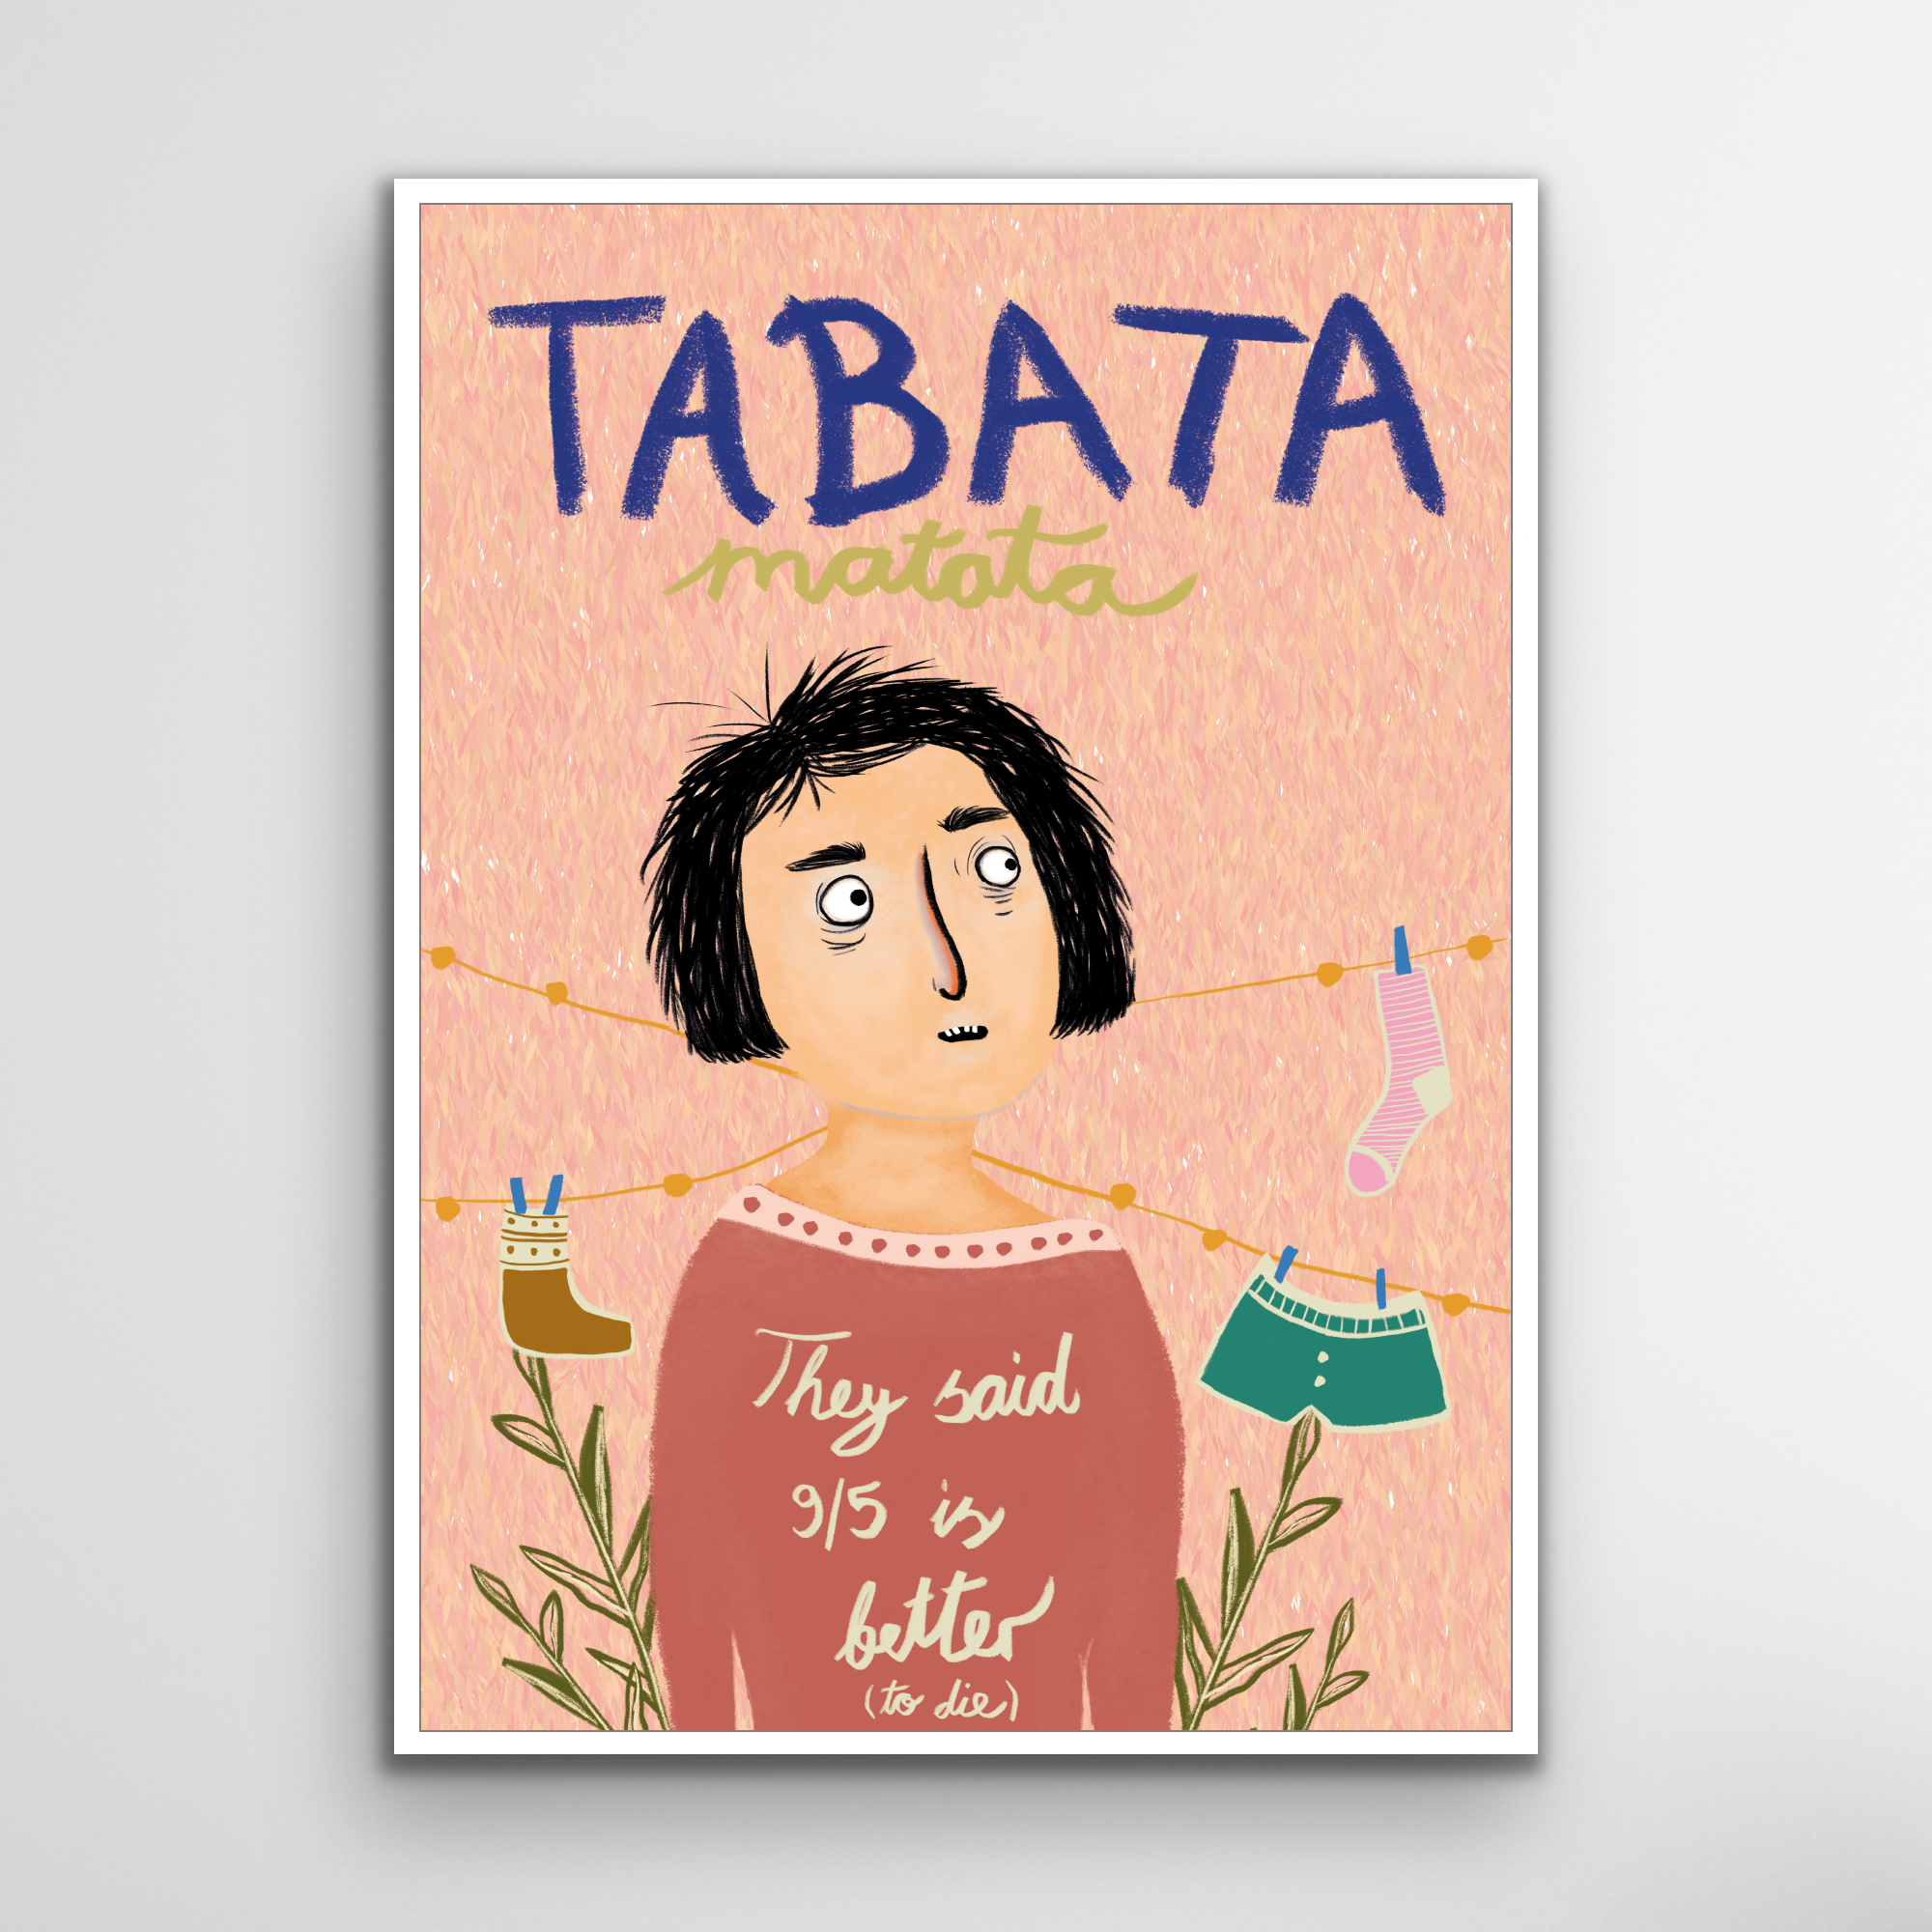 Poster: "Tabata Matata"